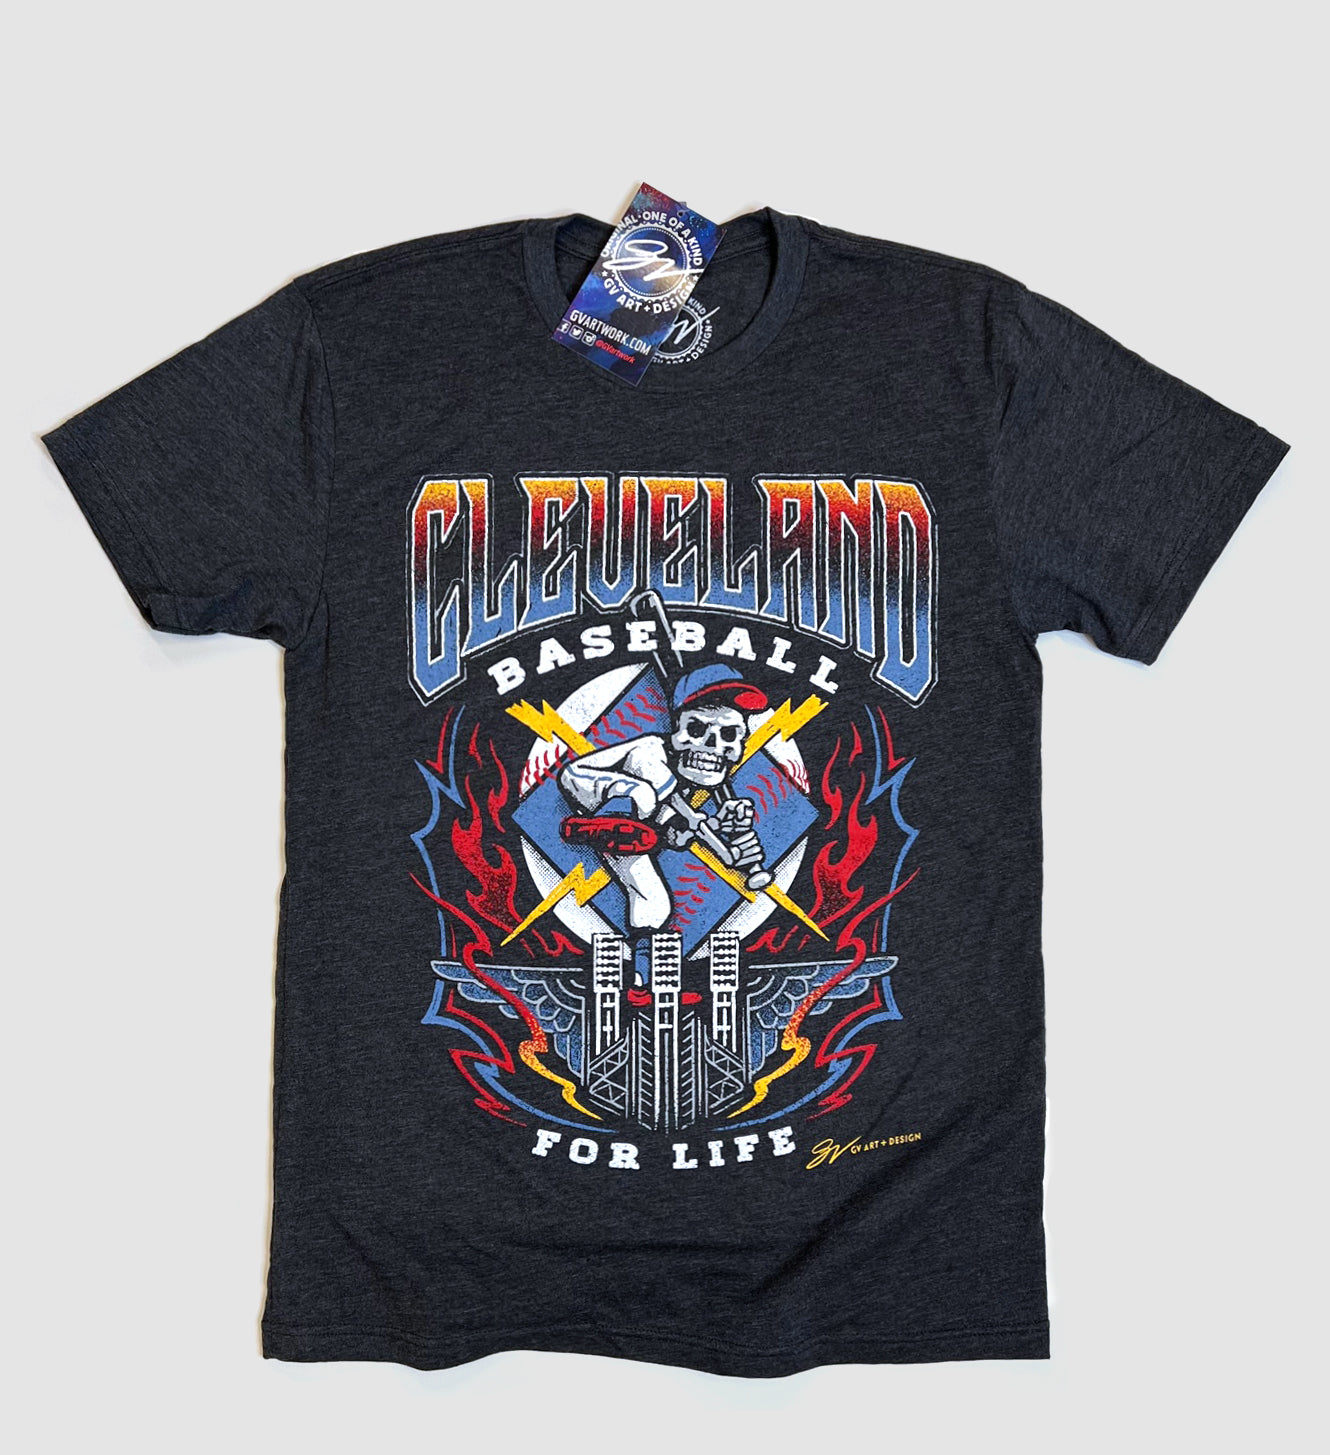 Cleveland Baseball For Life Tour T shirt